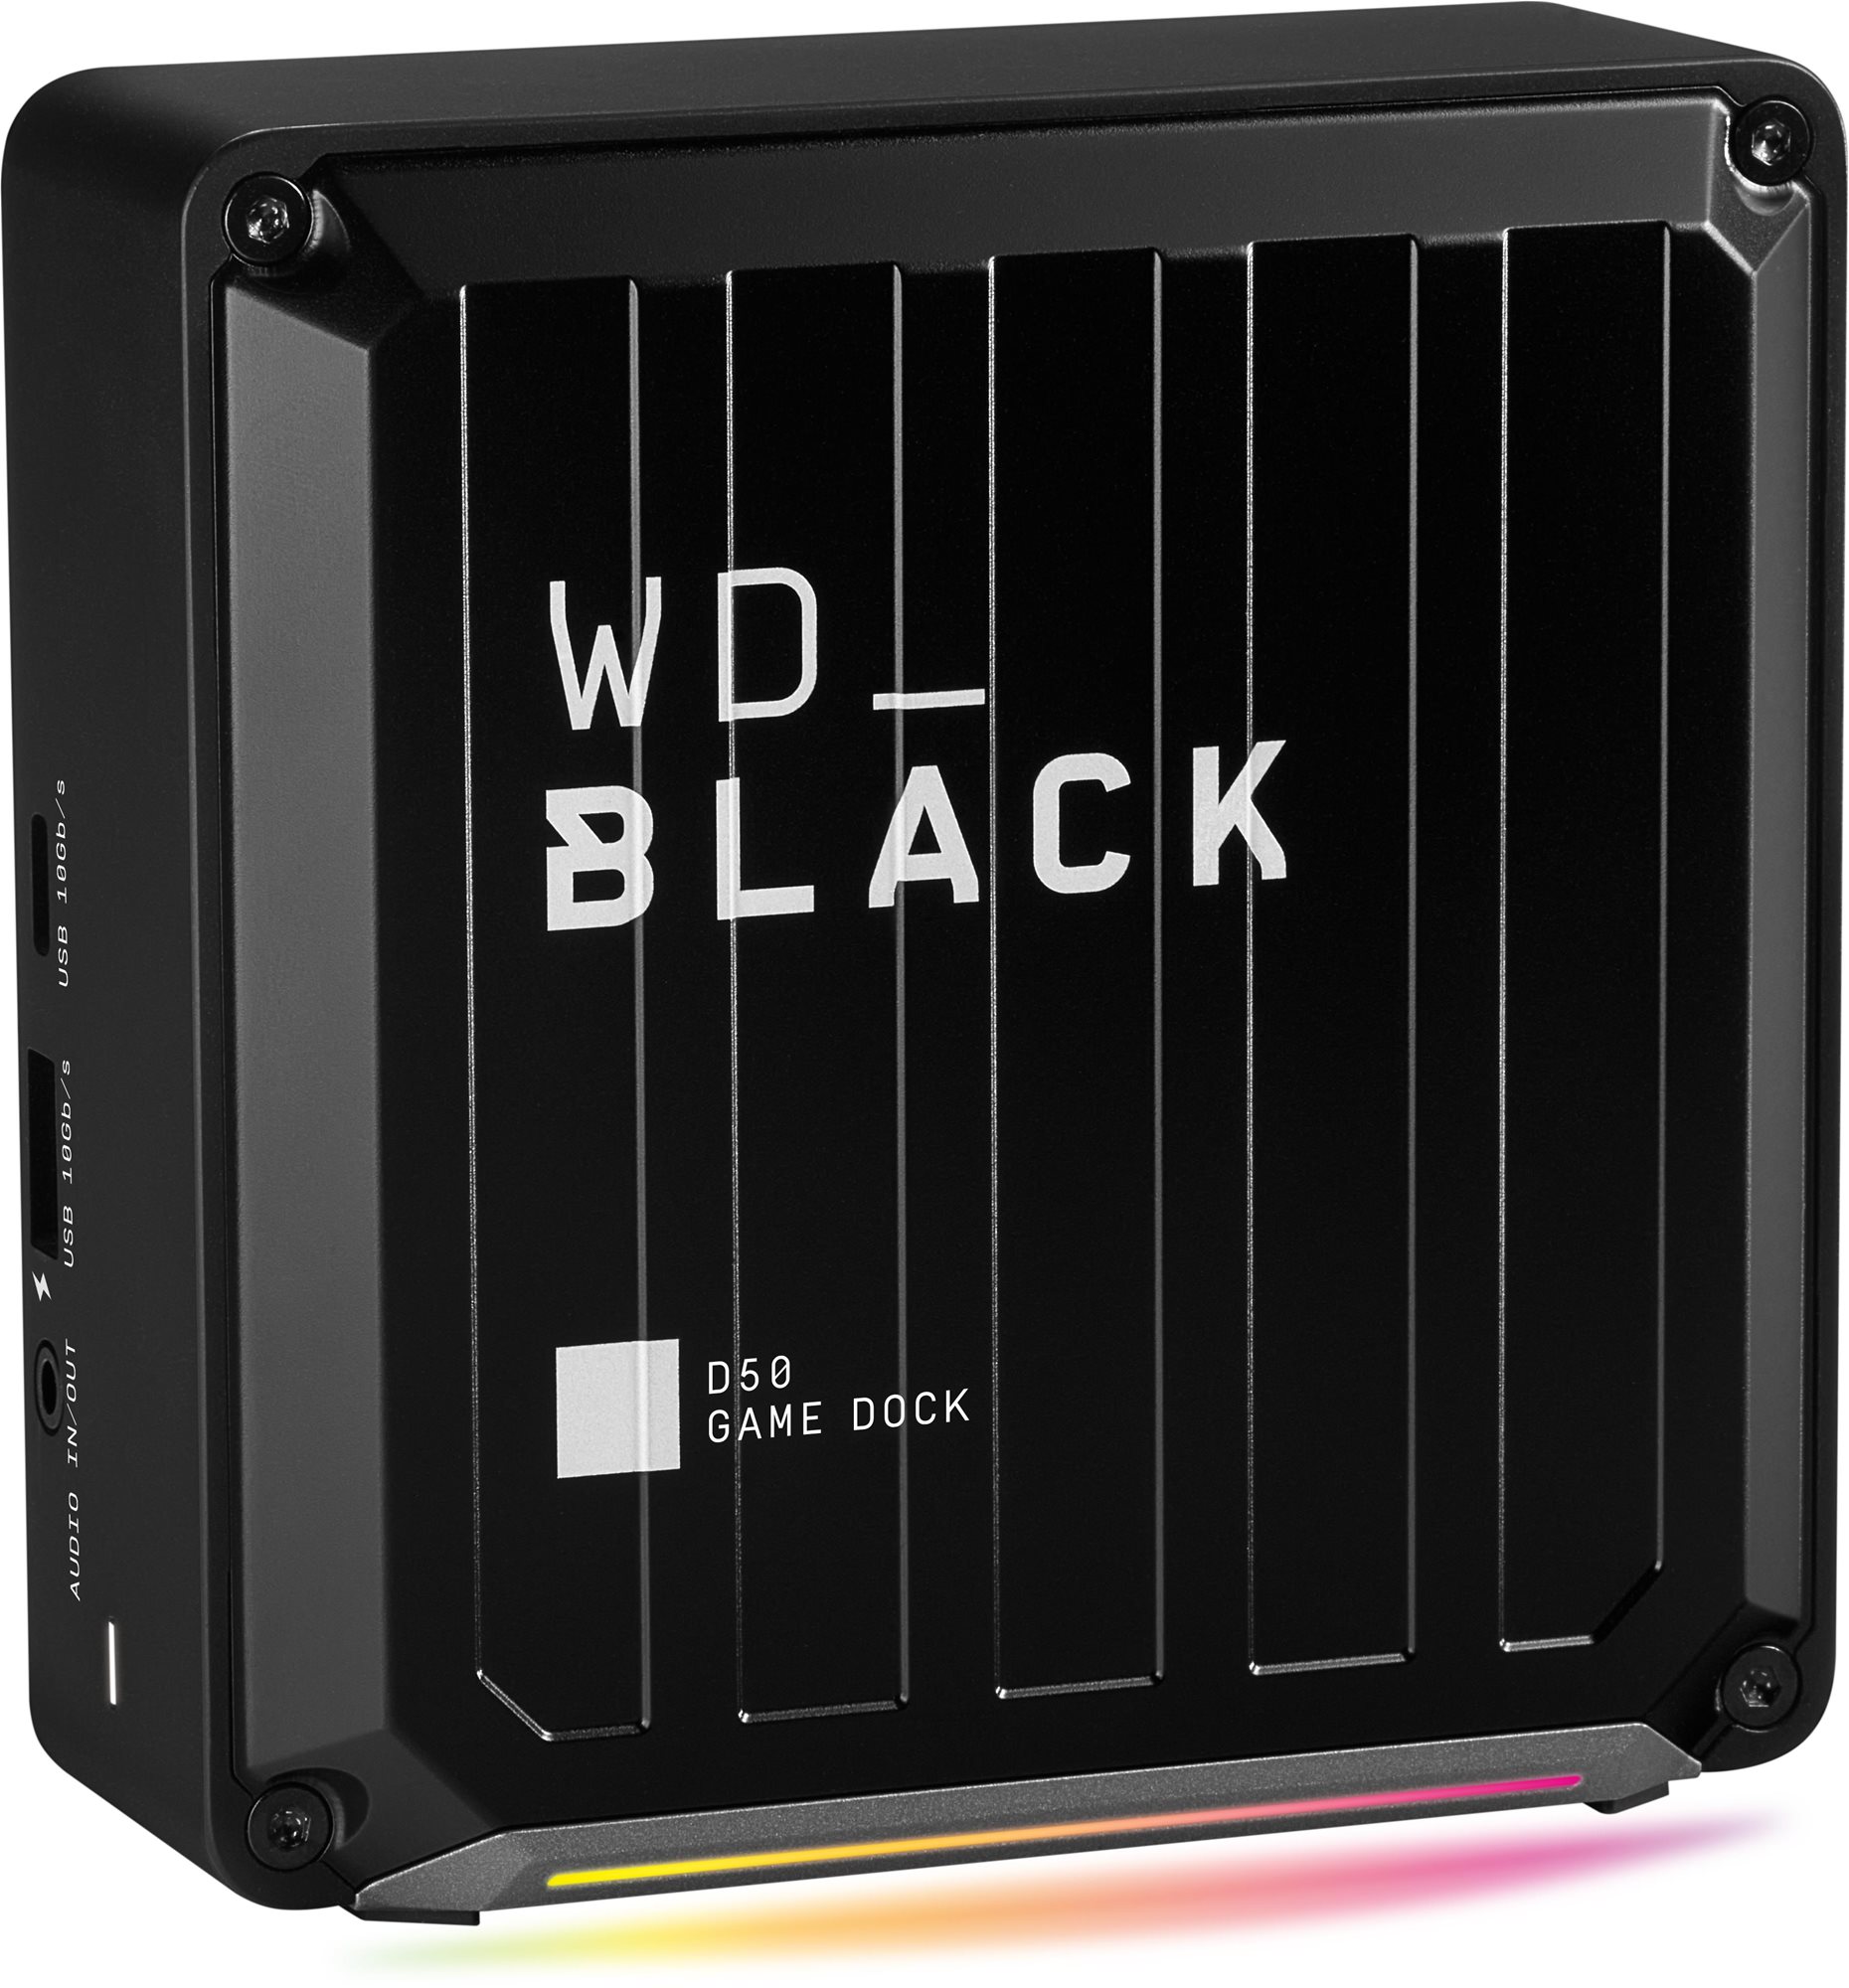 Adattároló WD Black D50 Game Dock 1TB